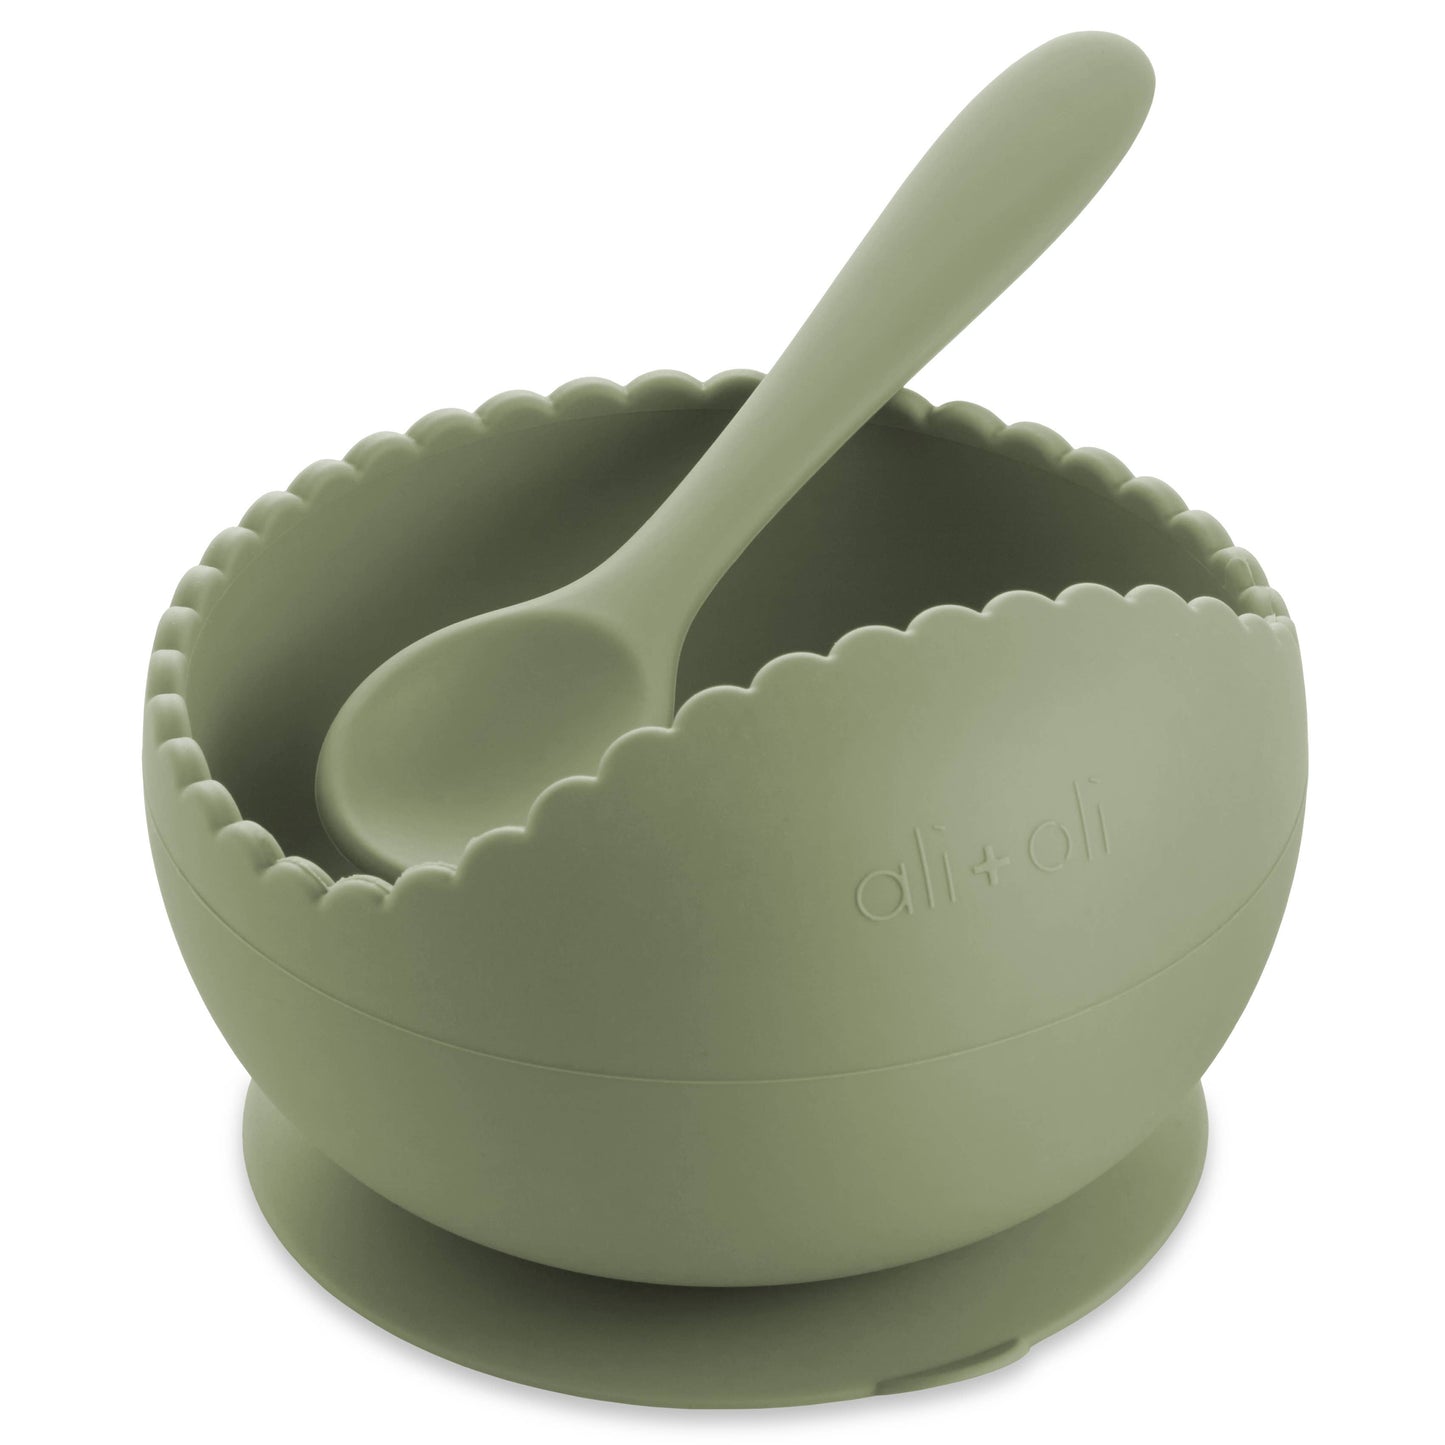 Ali+Oli Silicone Suction Bowl & Spoon Set, Wavy in Sage